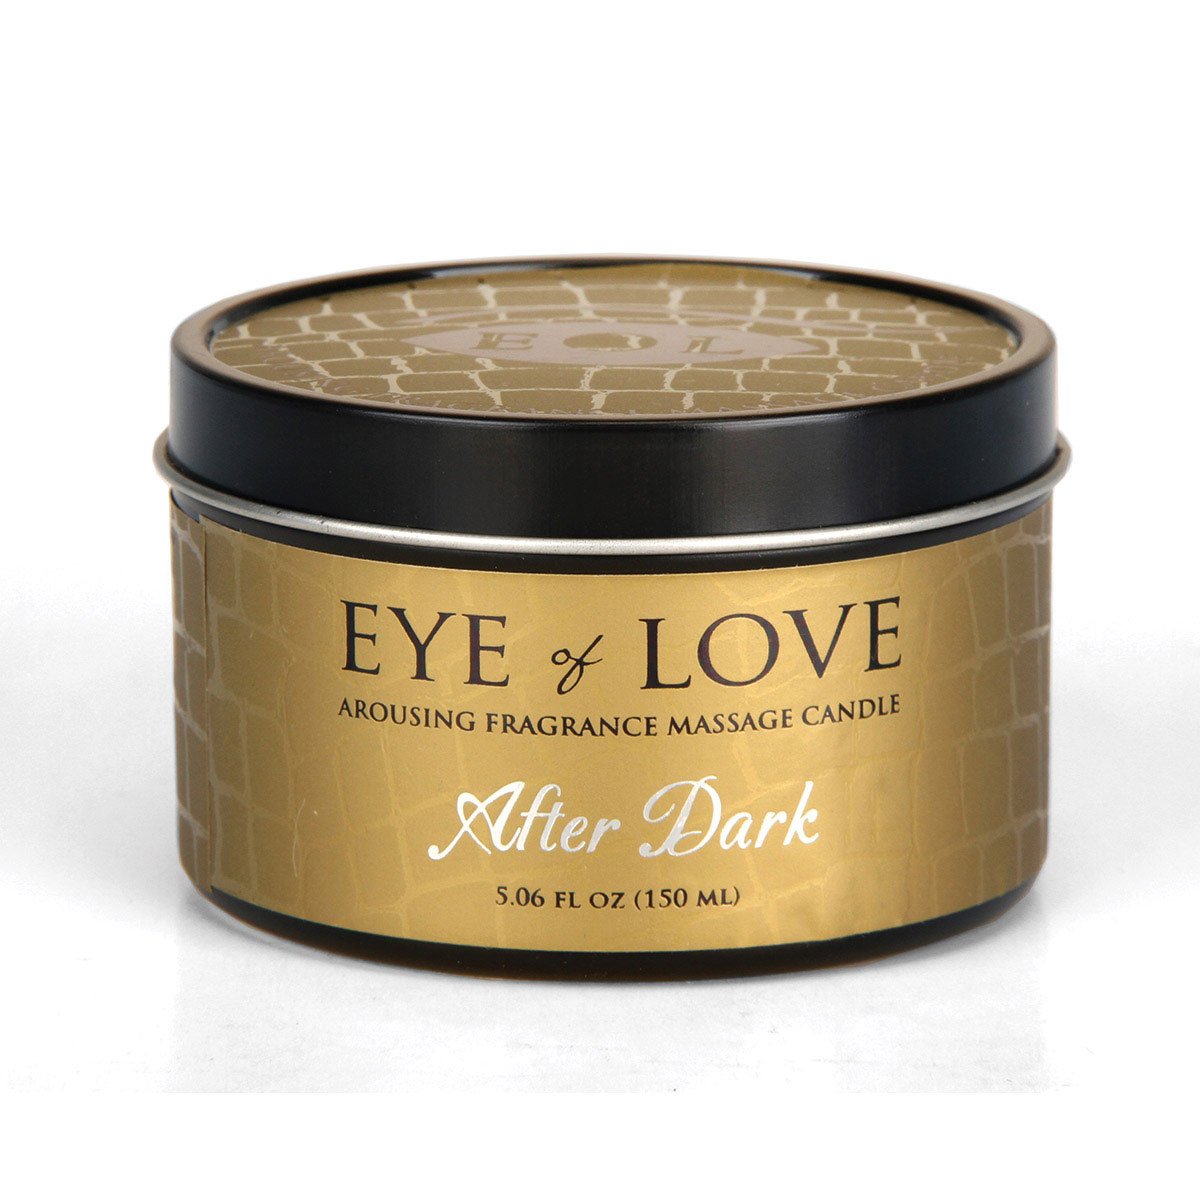 Eye of Love Pheromone Massage Candle 5oz - After Dark